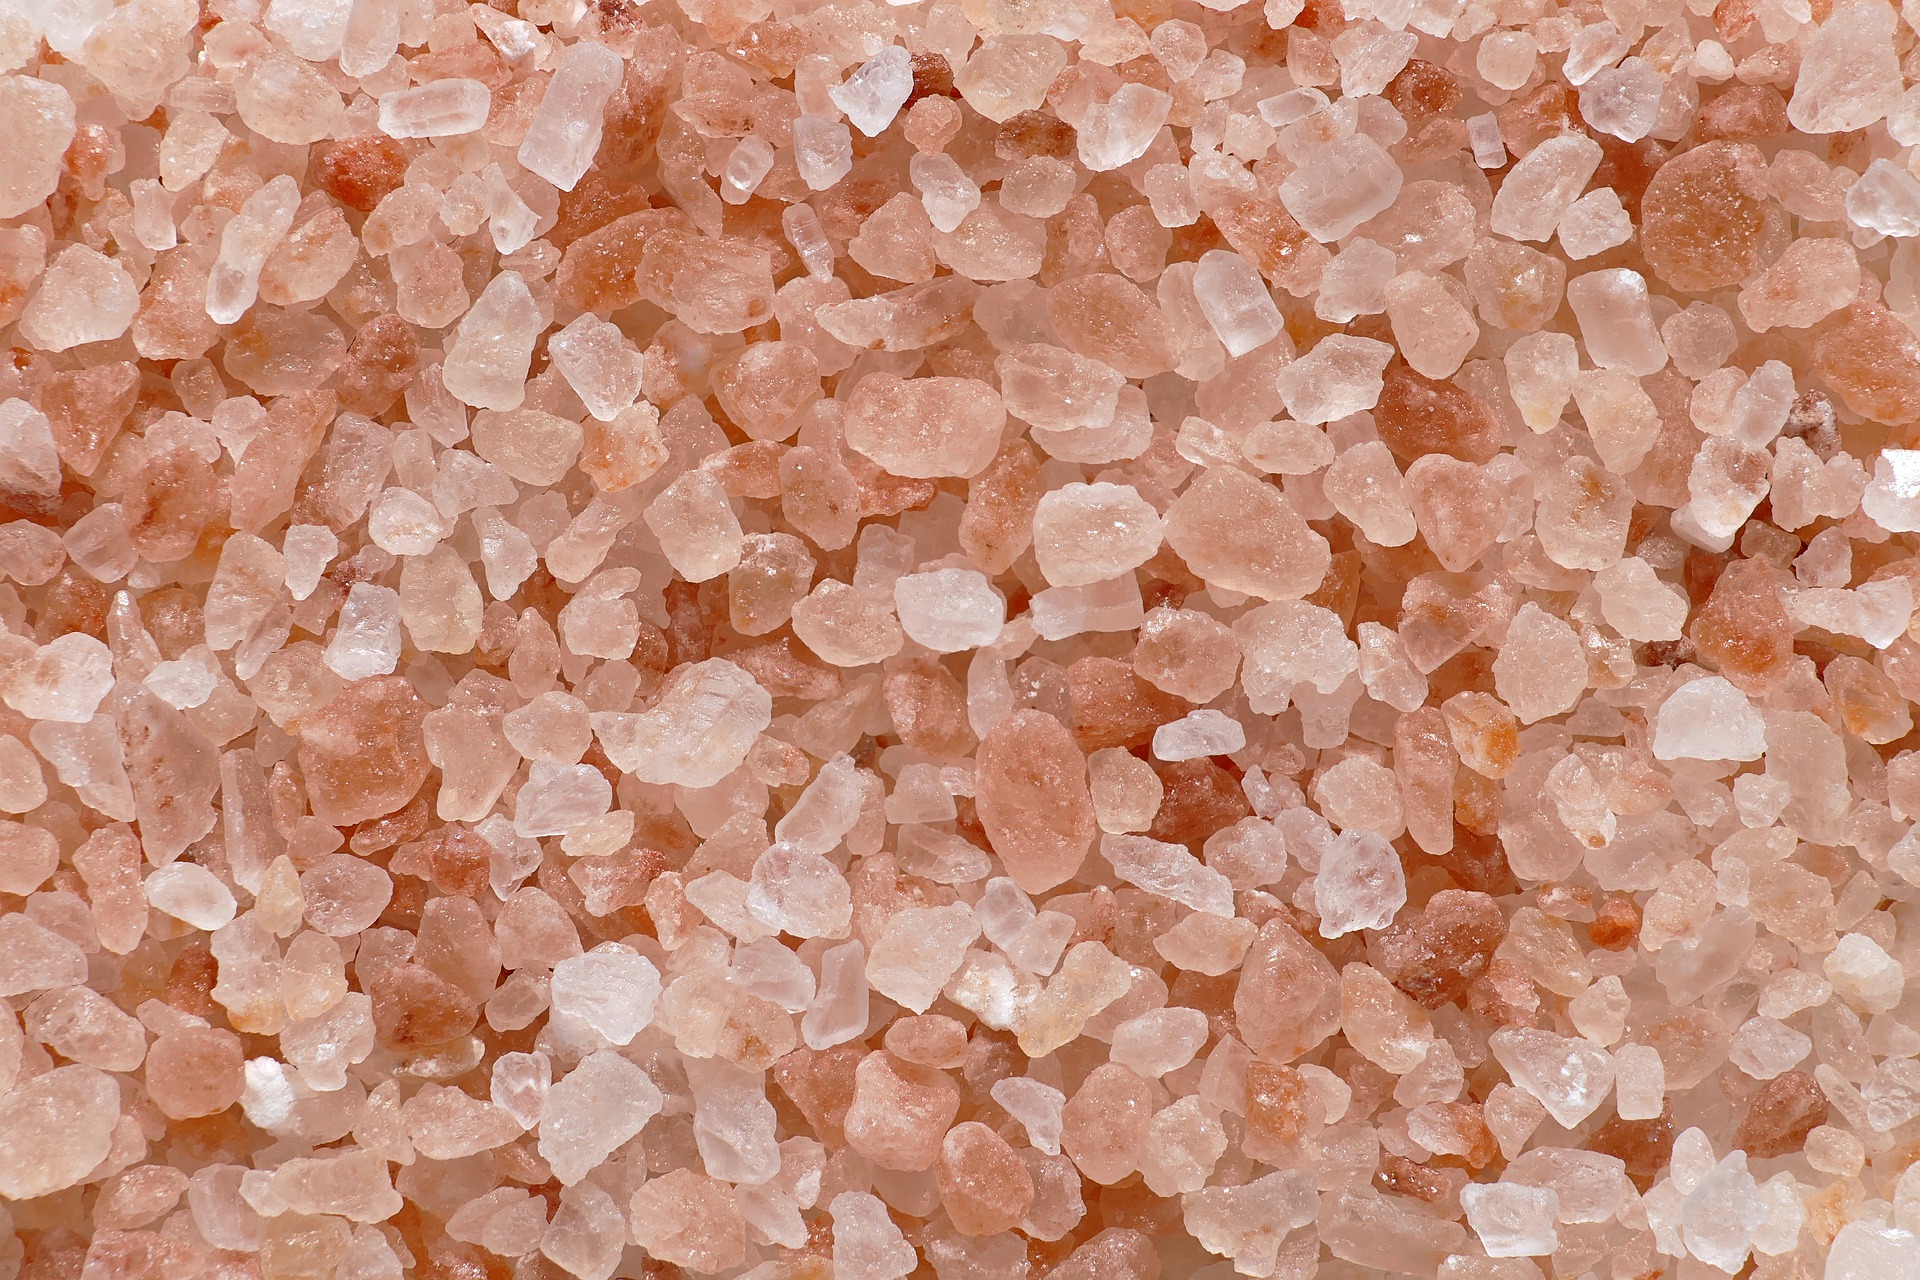 is-diamond-crystal-salt-discontinued-eating-expired